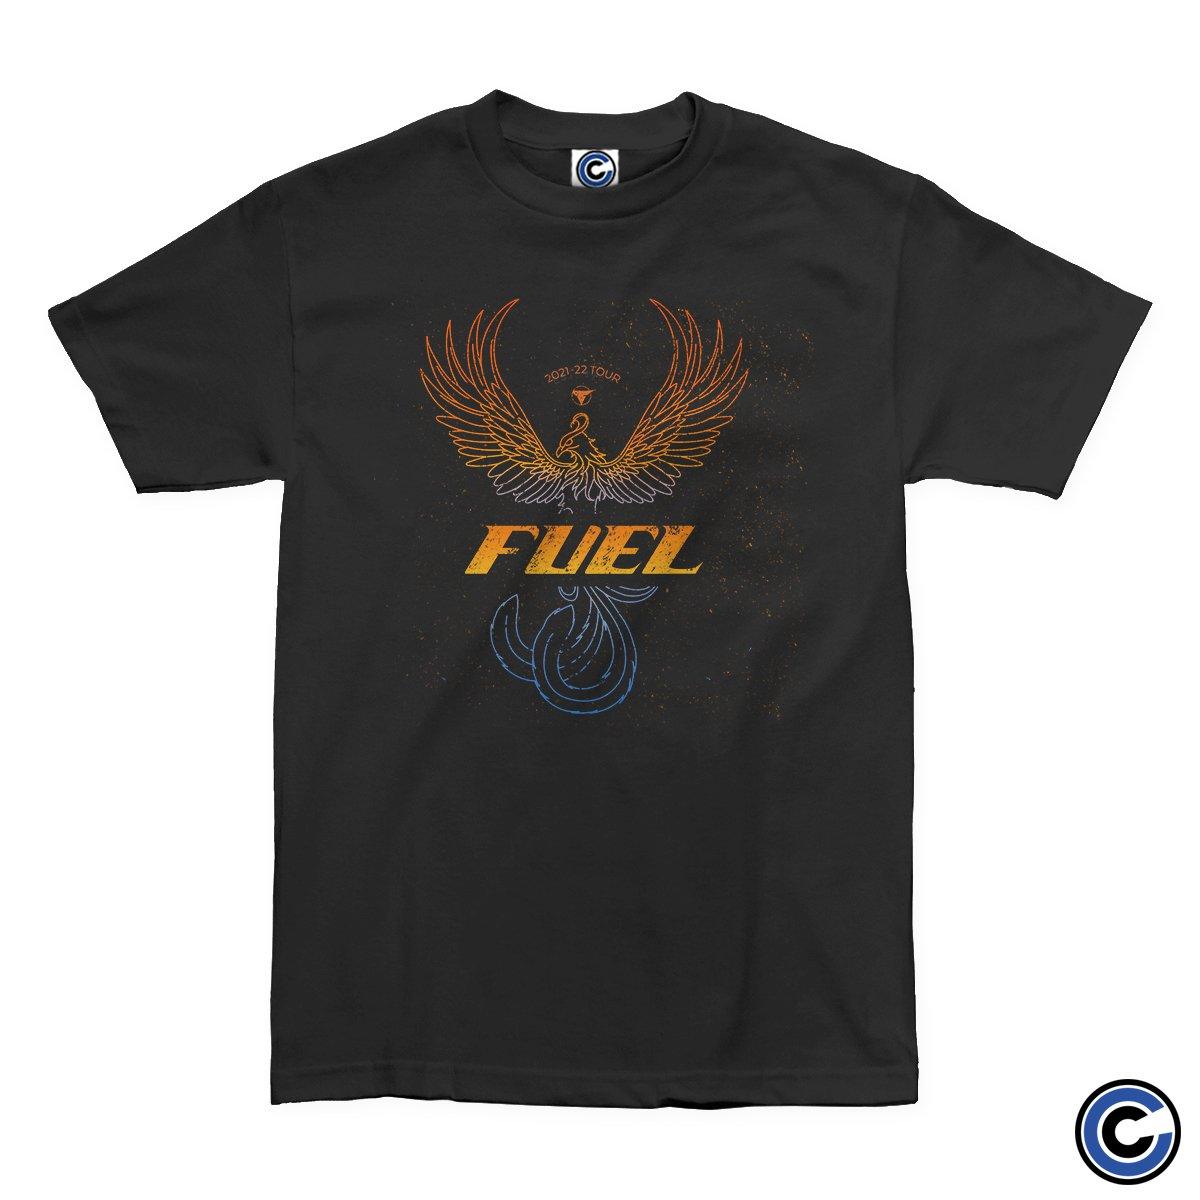 Buy – Fuel "Phoenix" Shirt – Band & Music Merch – Cold Cuts Merch